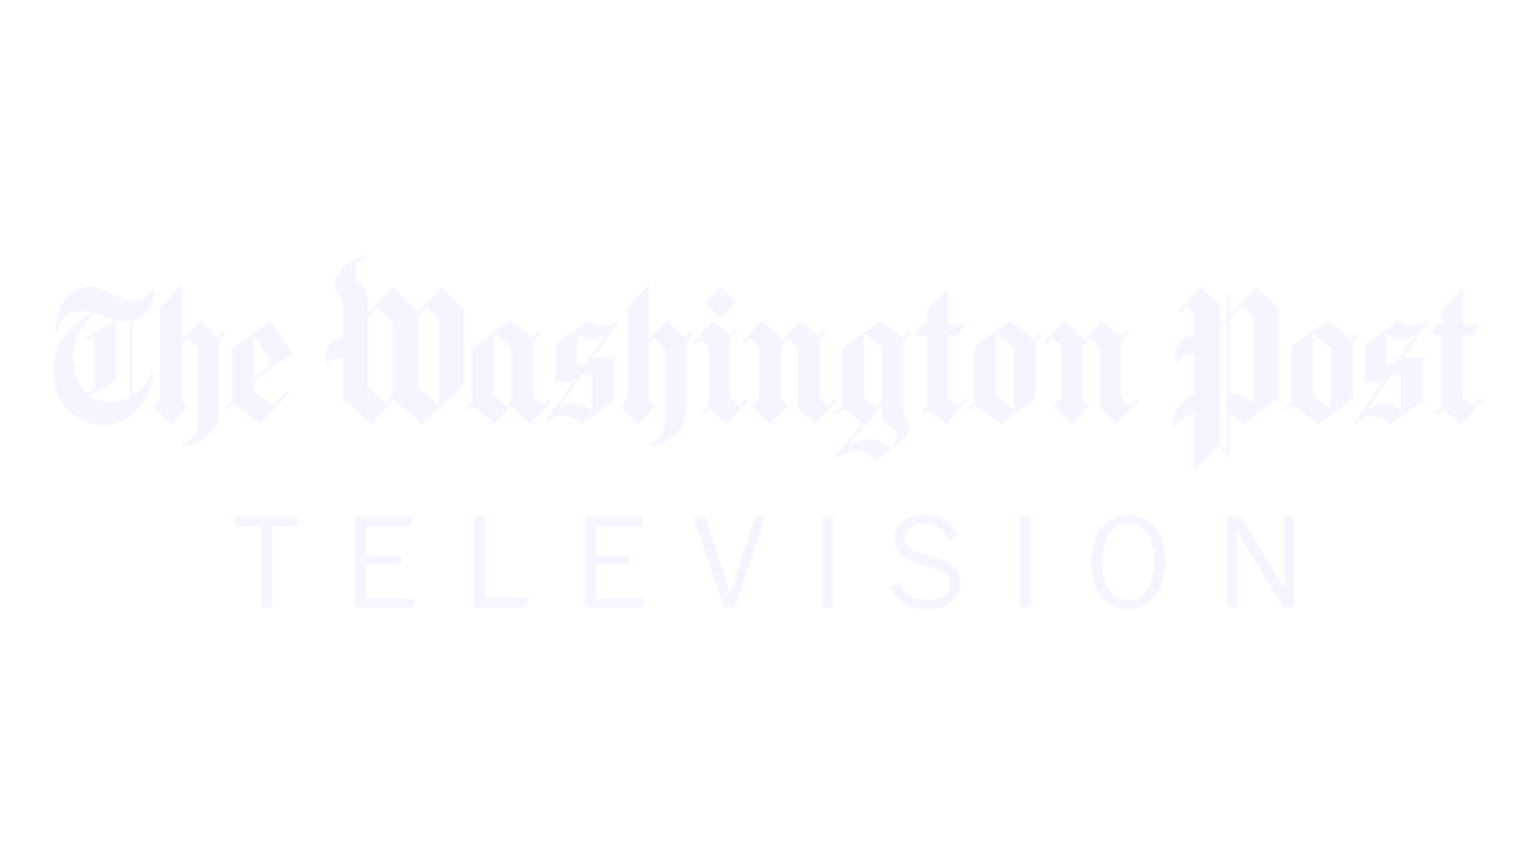 Washington Post Television